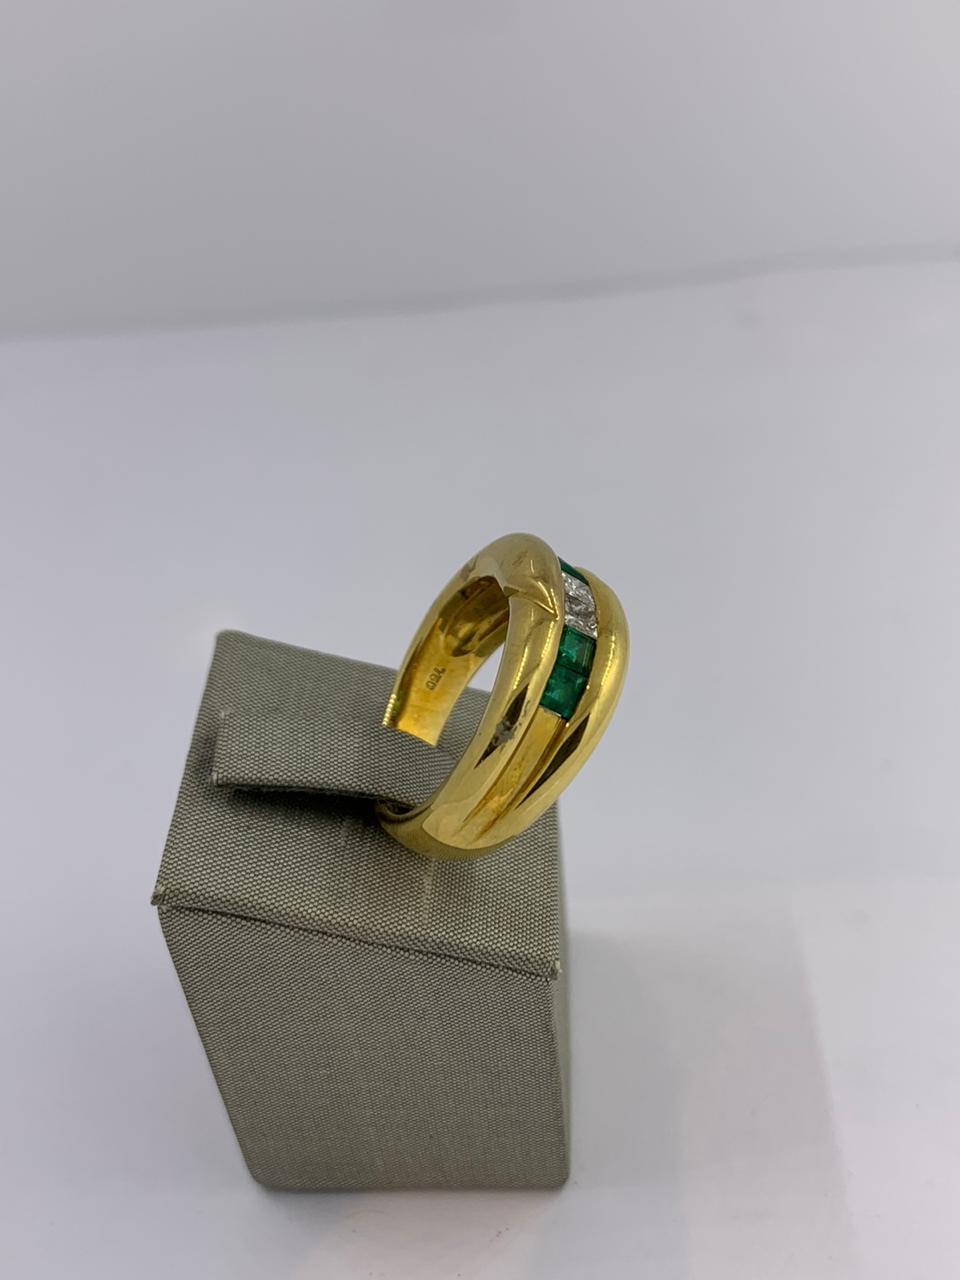 Emerald and Diamond Ring
set in 18Kt Yellow Gold
Diamonds 0.28 ct
Emeralds 0.60 ct
21-11-960